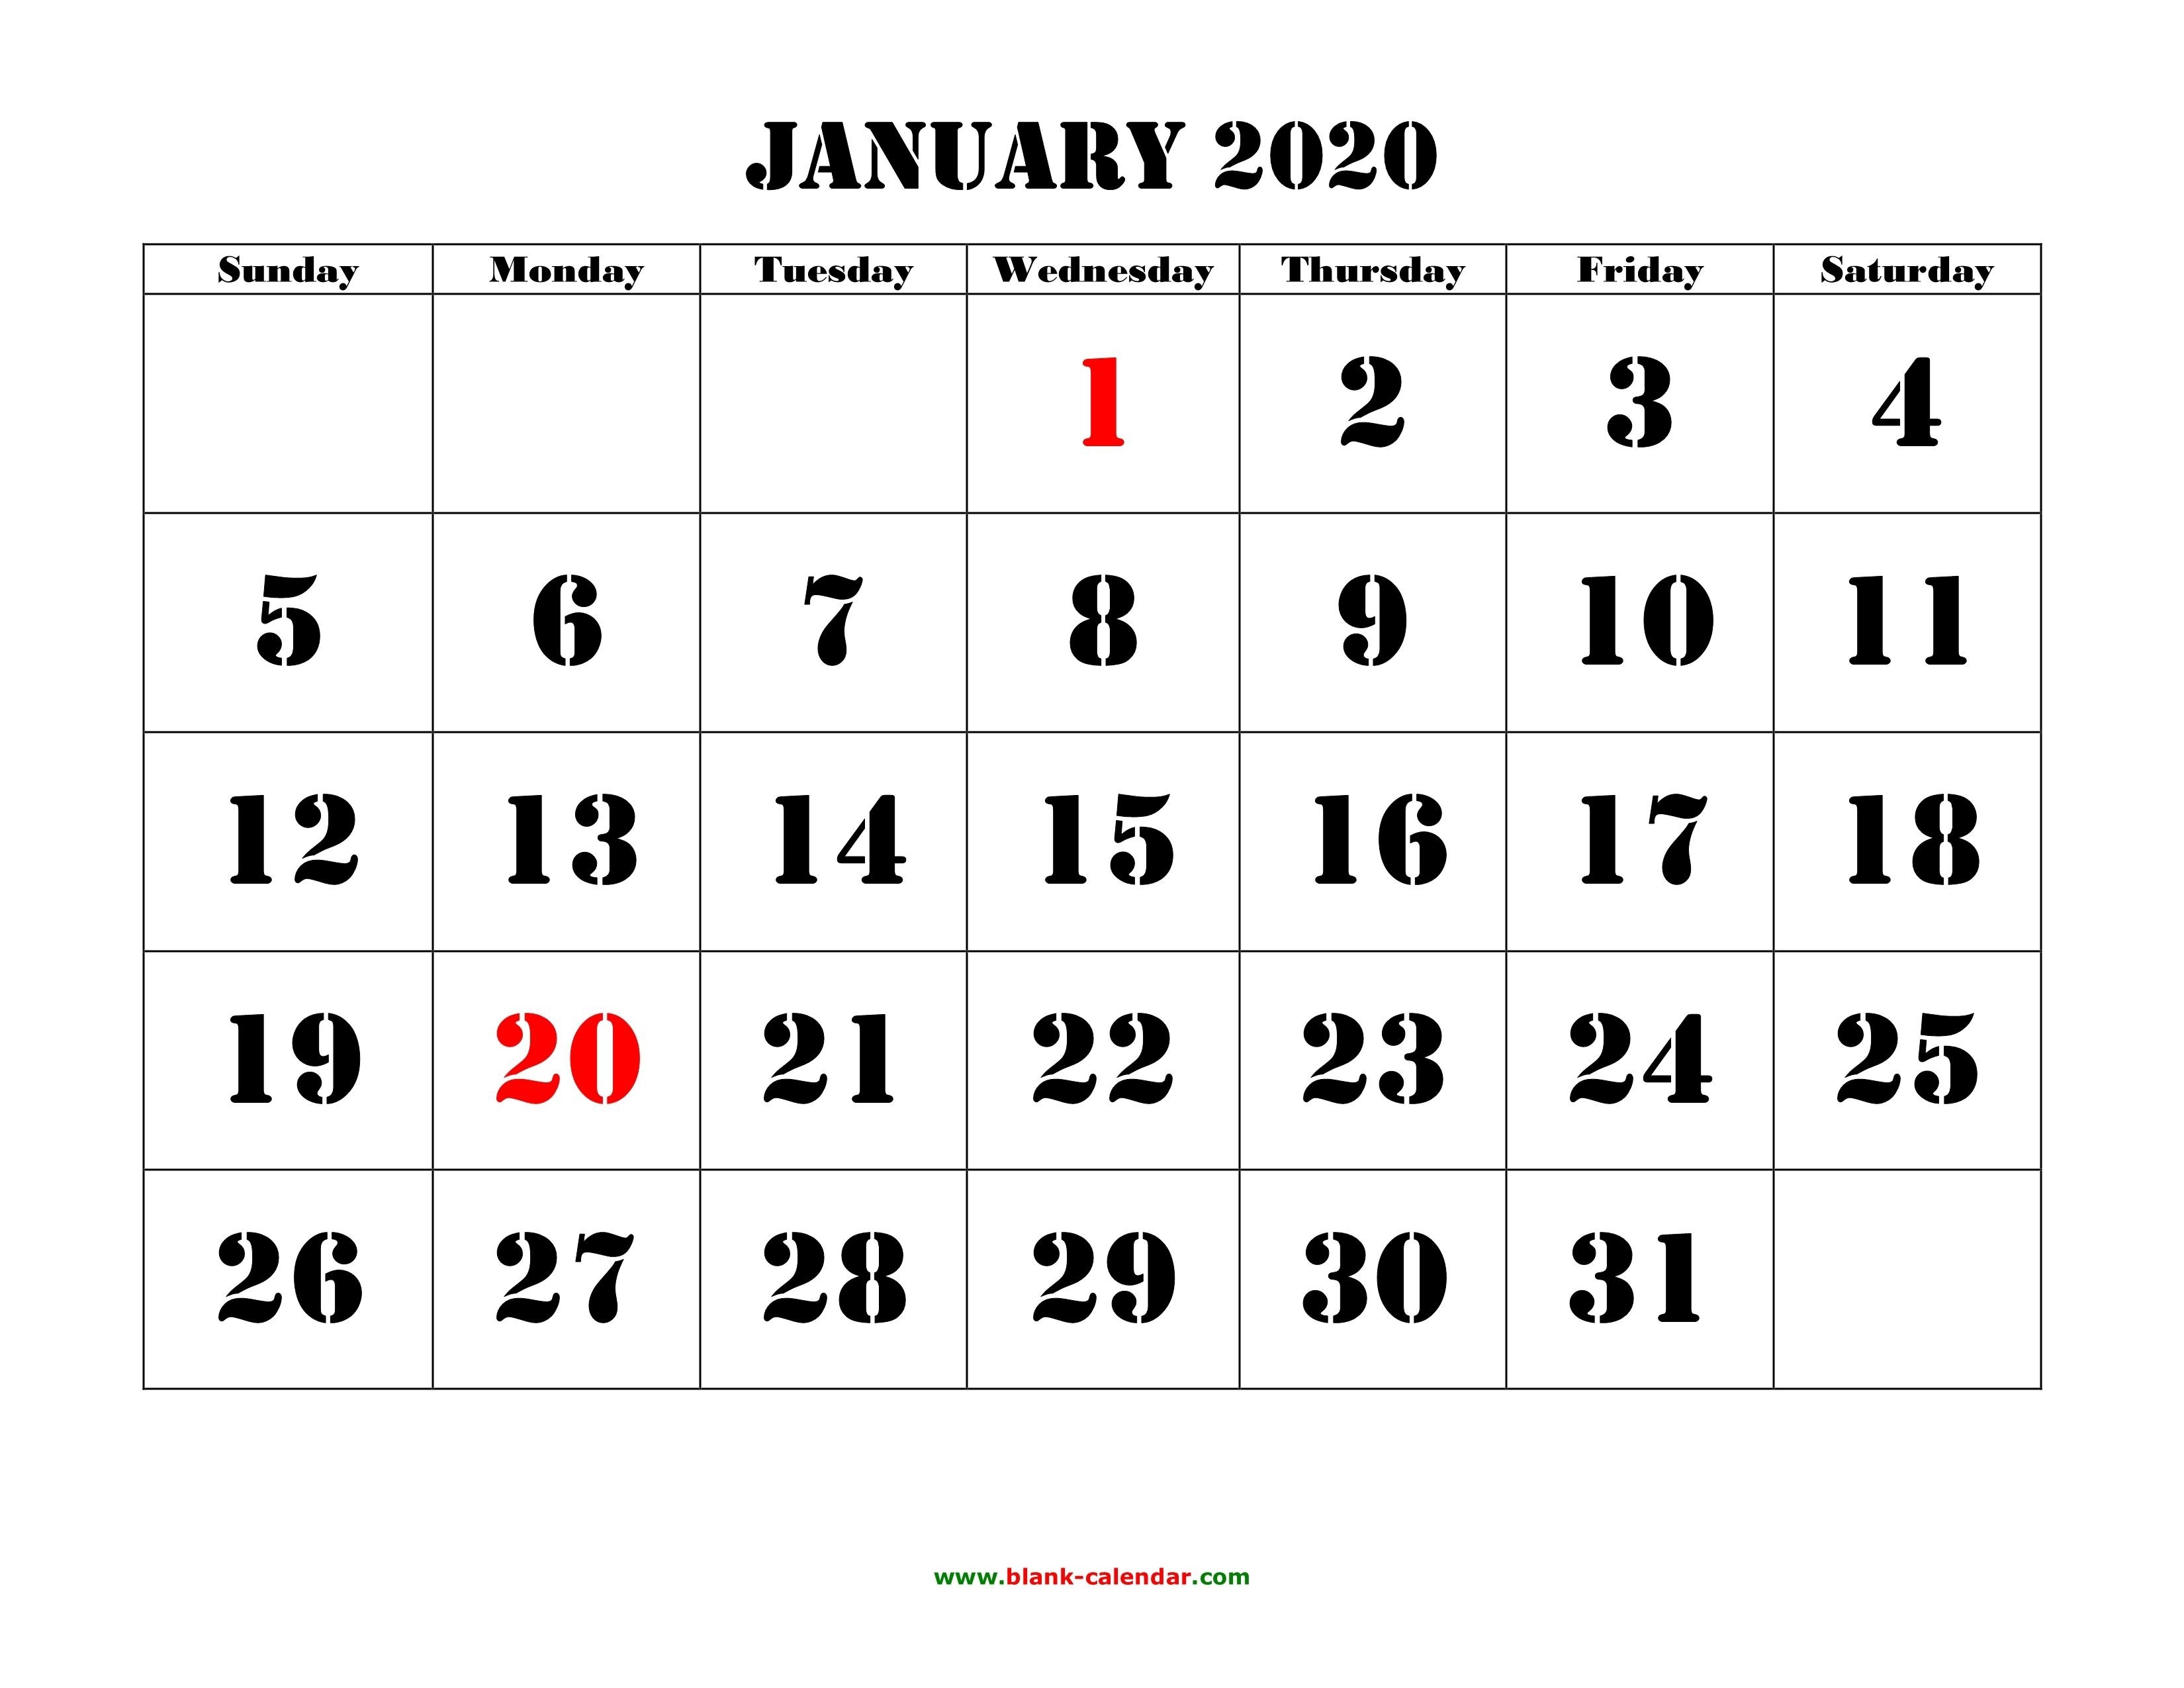 2020 Calendar Wallpapers - Wallpaper Cave-January 2020 Chinese Calendar